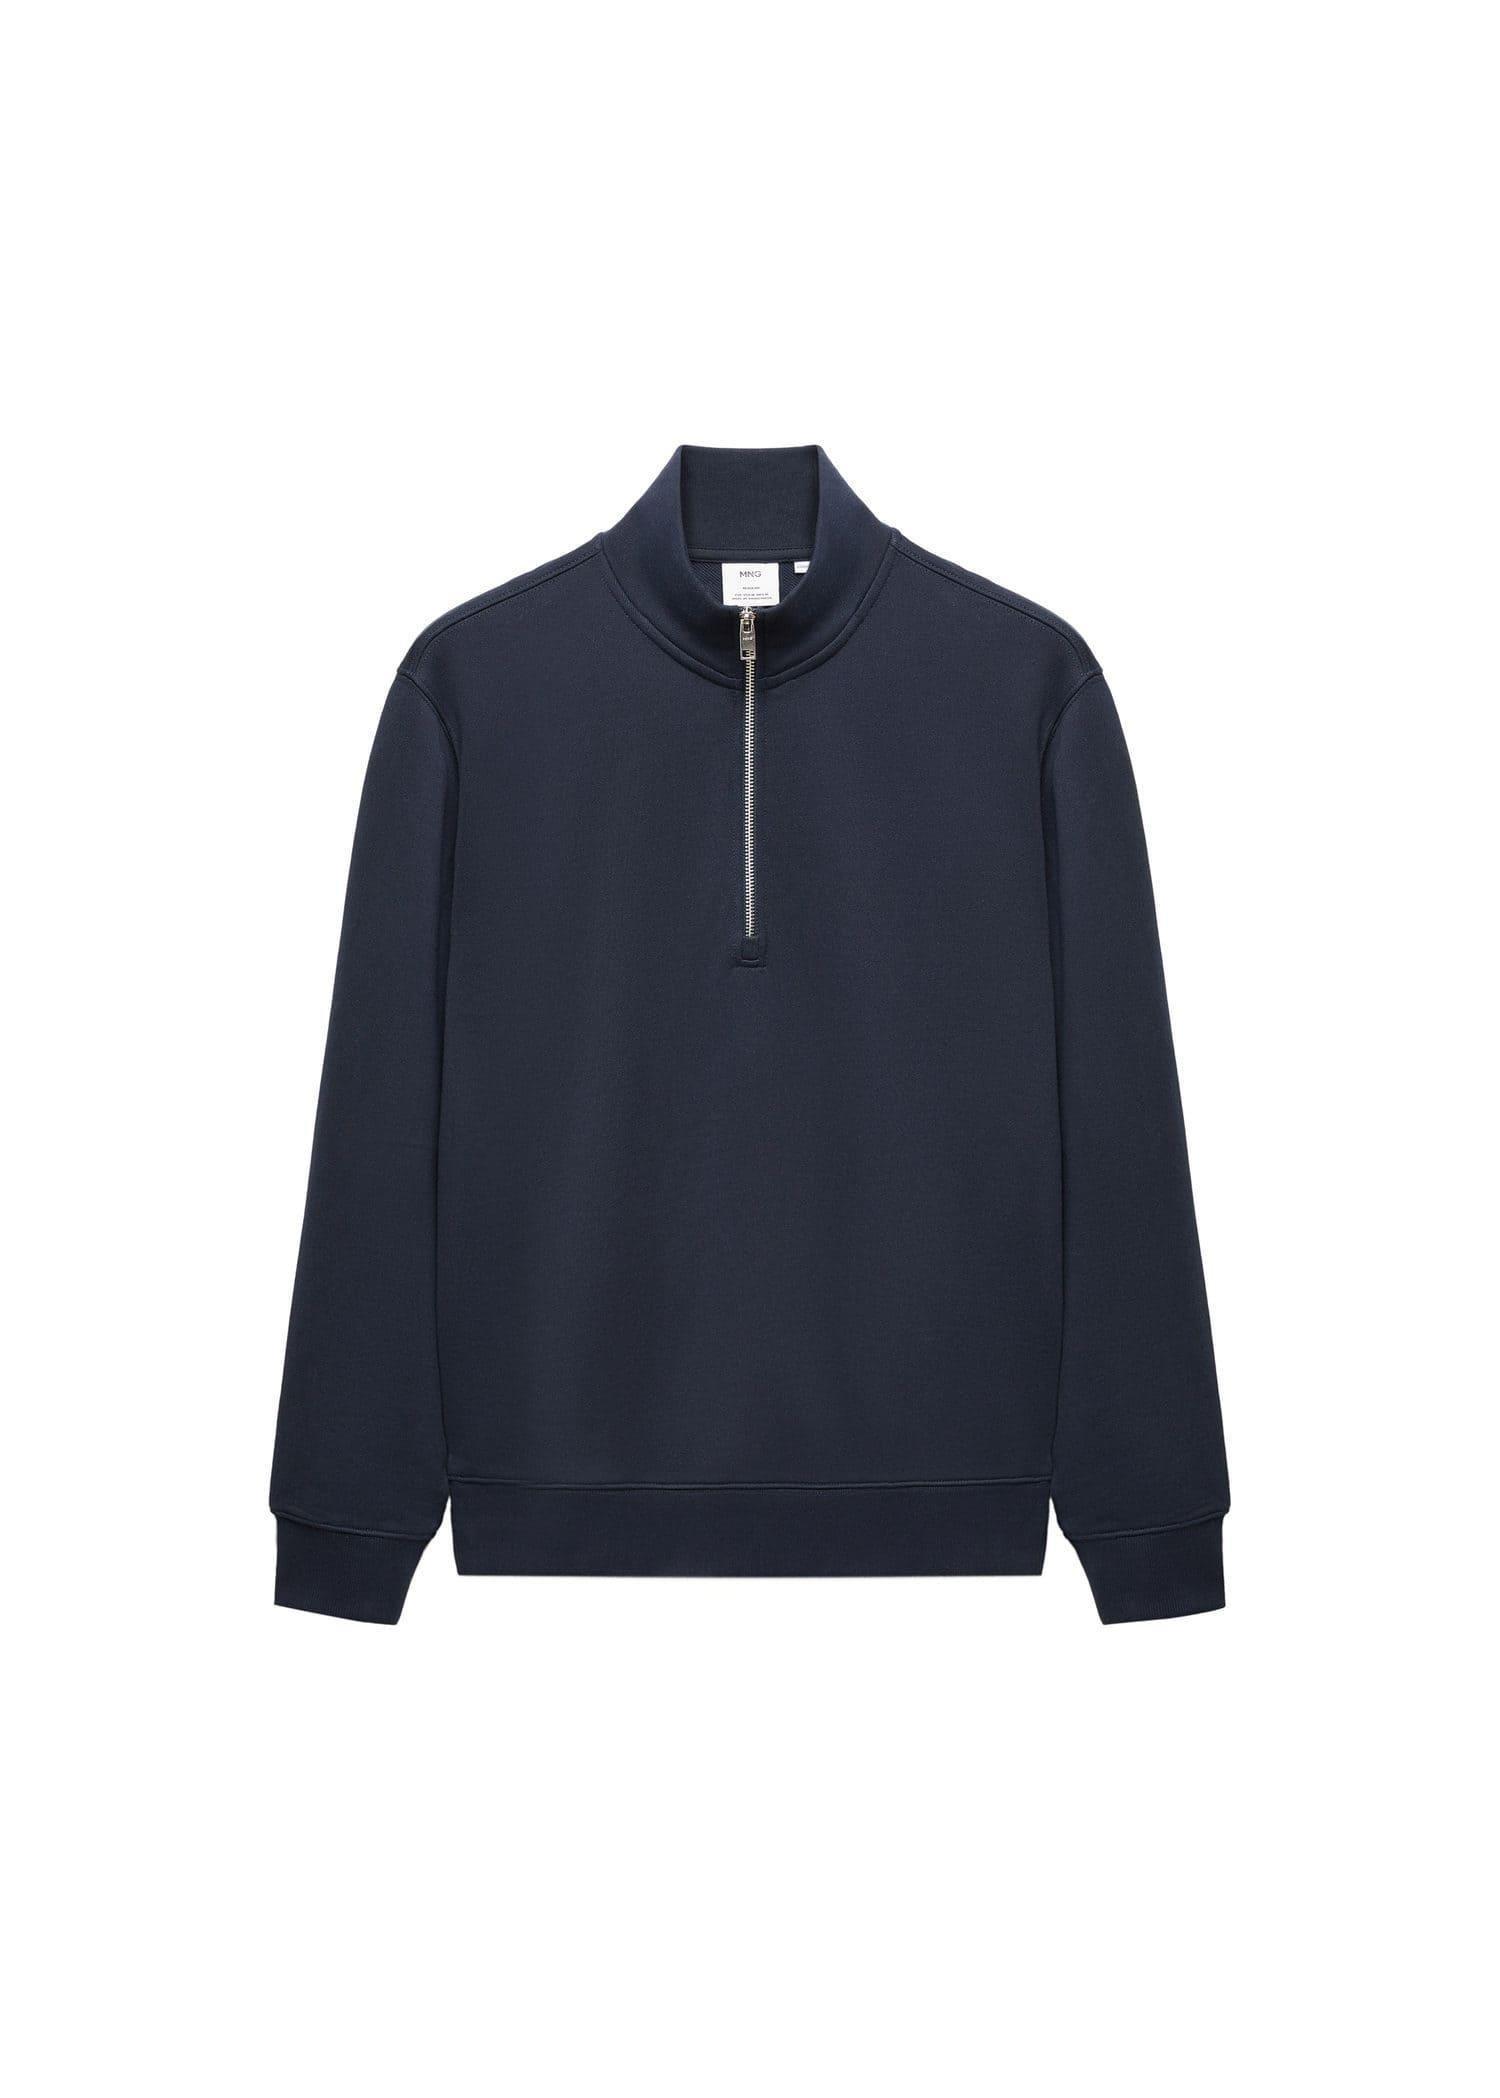 Mango - Navy Zipper Cotton Sweater